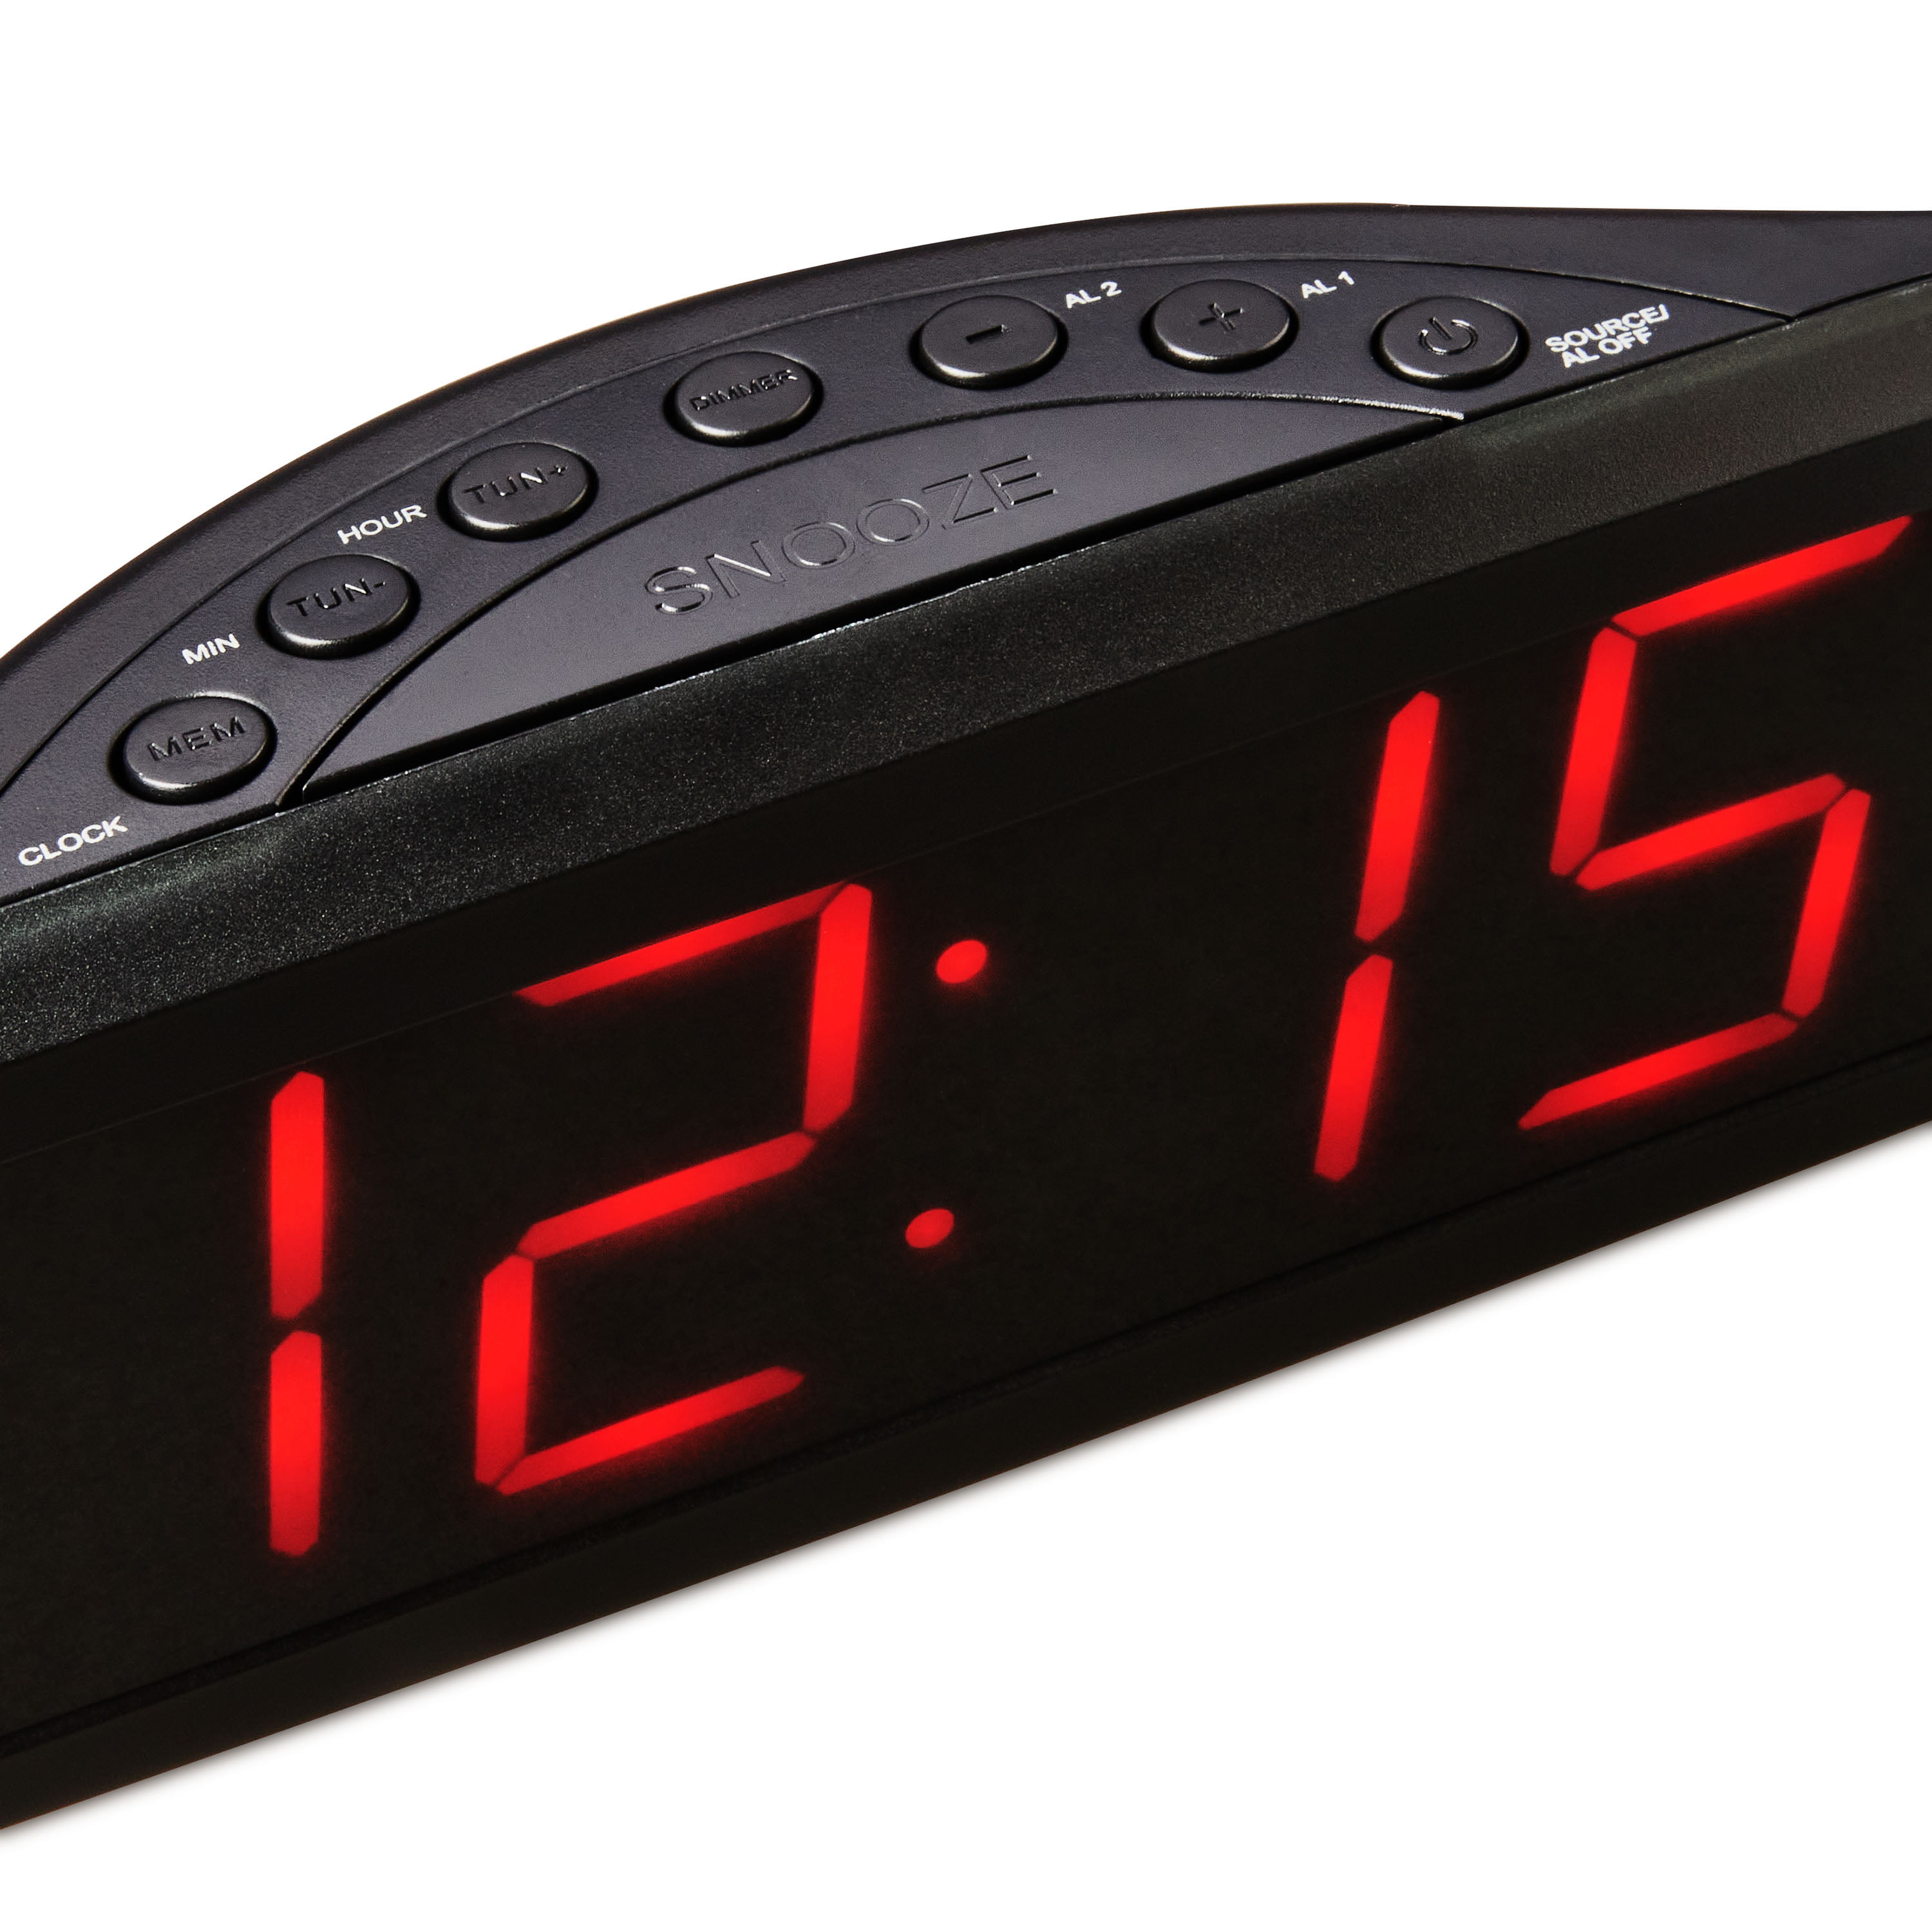 Onn ONA15AV101_EGB-RB AM/FM Digital Alarm Clock Radio Certified Refurbished